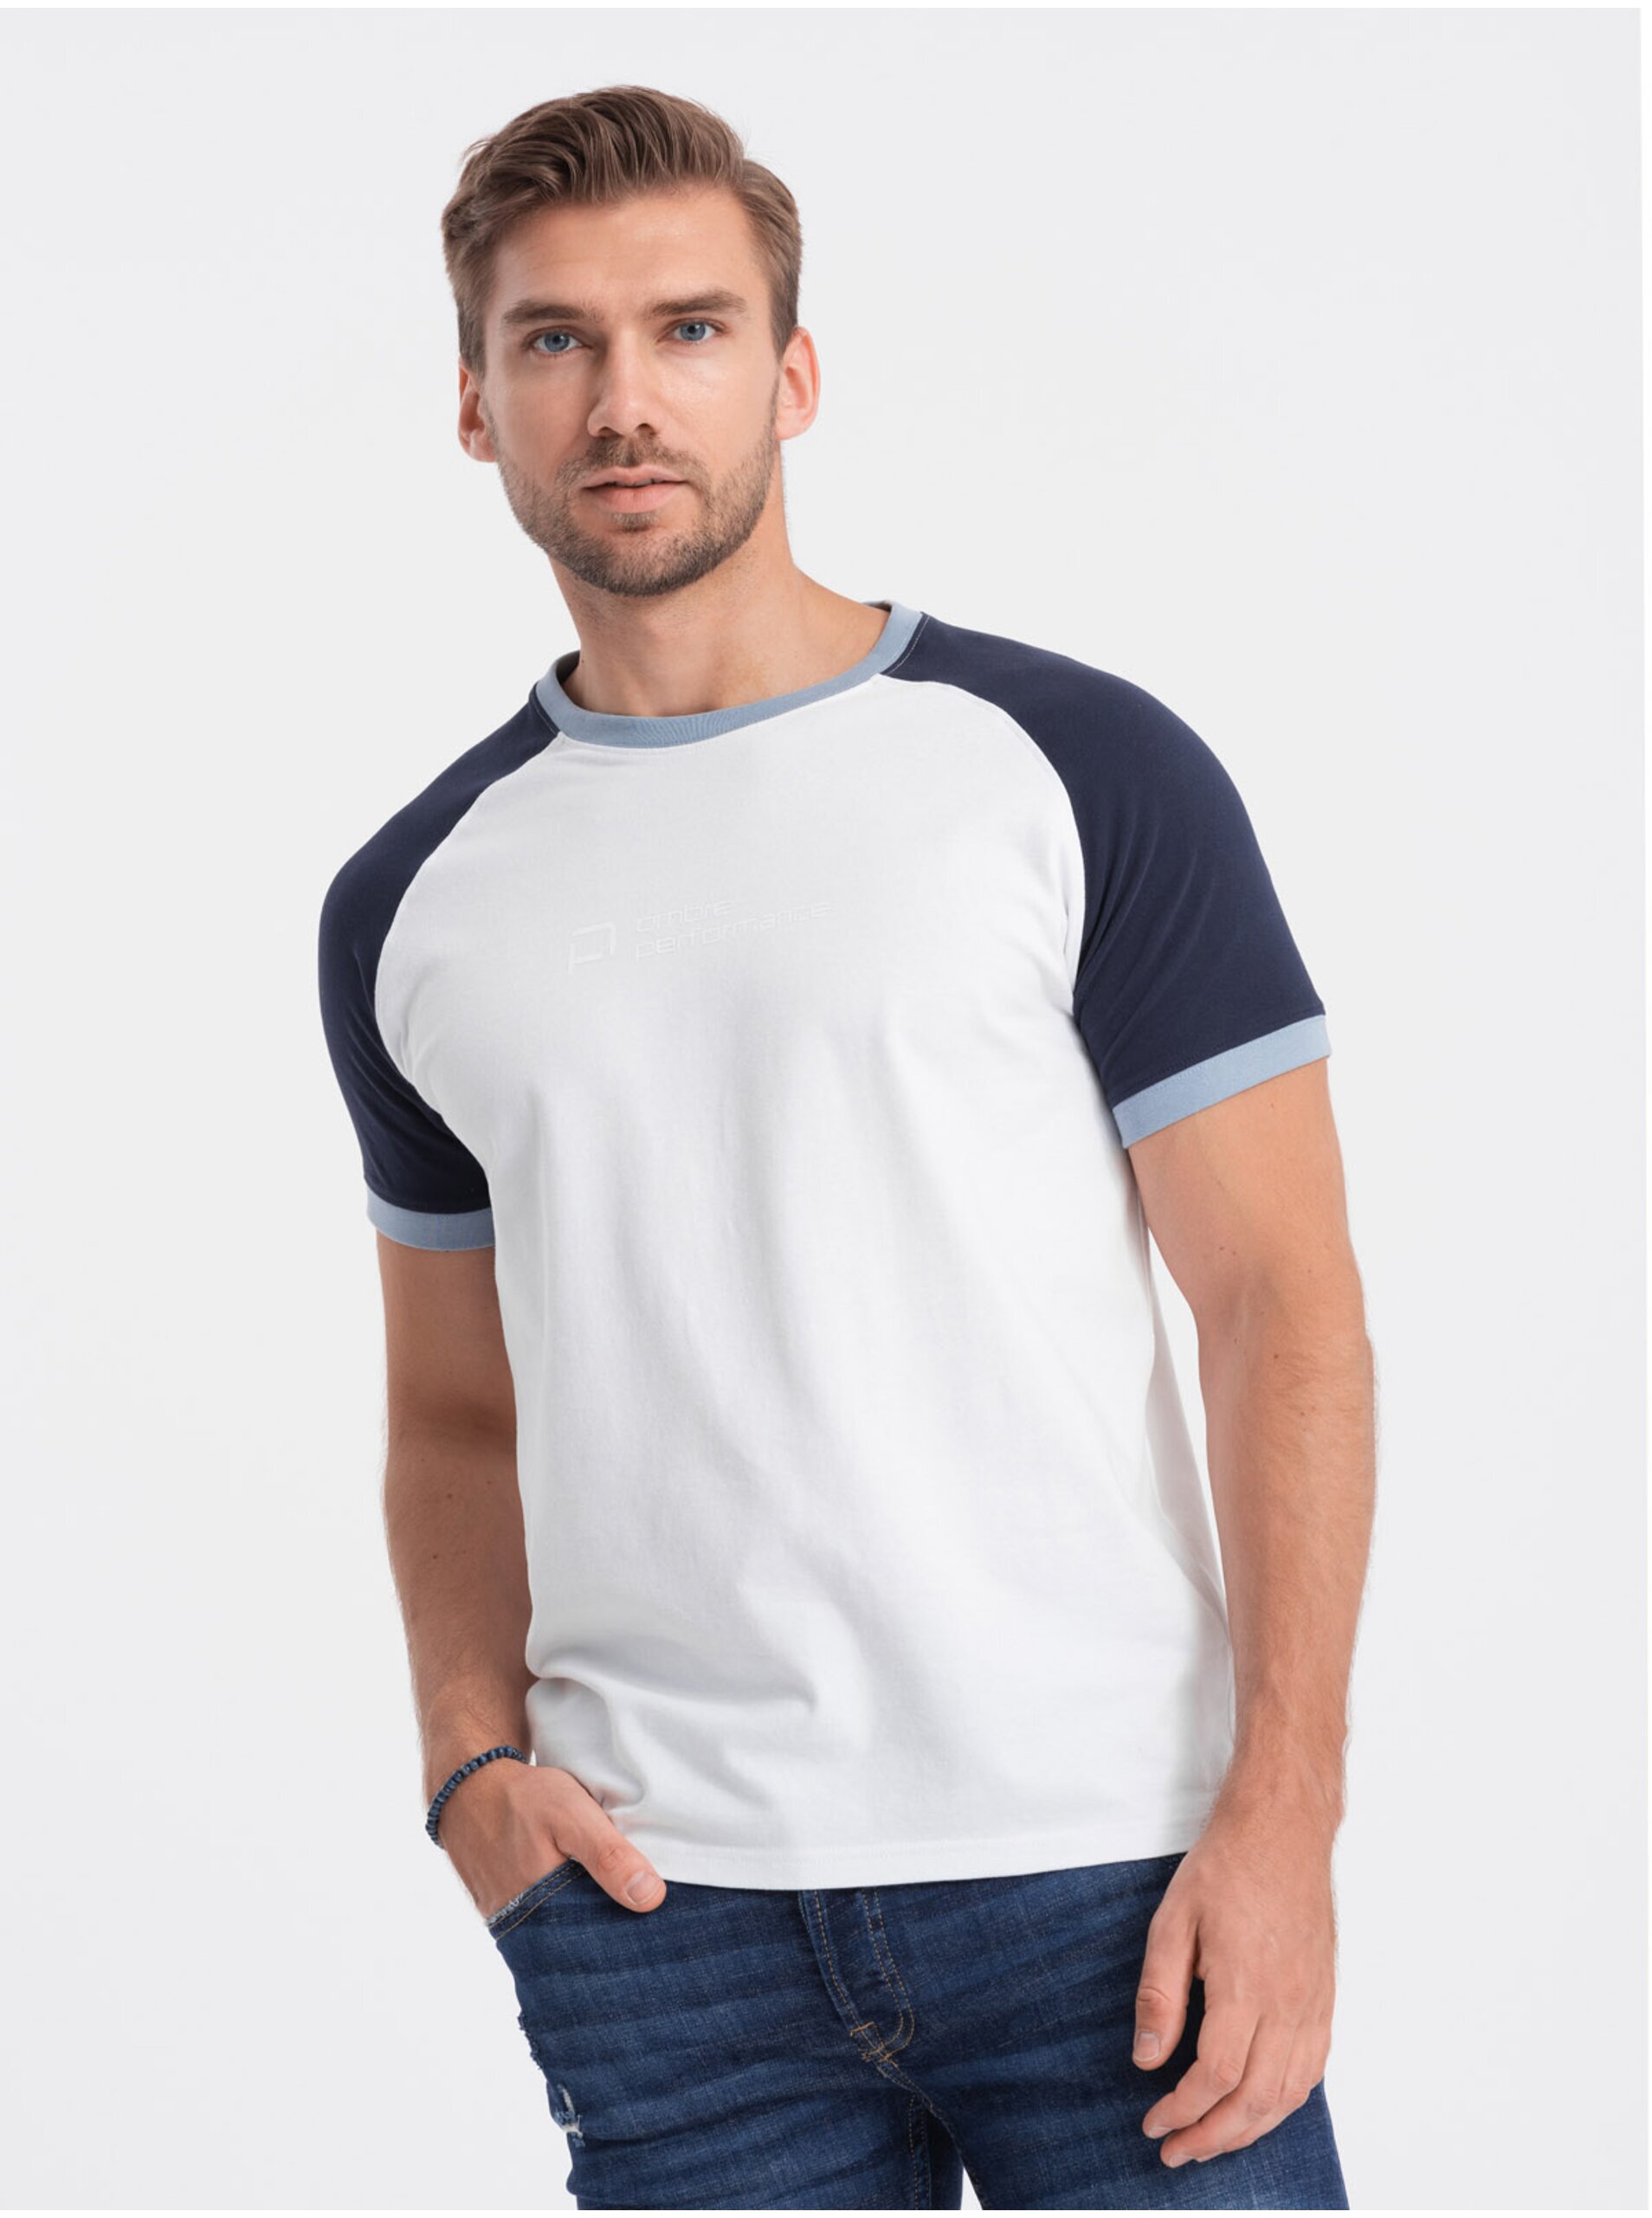 Lacno Modro-biele pánske tričko Ombre Clothing Reglan